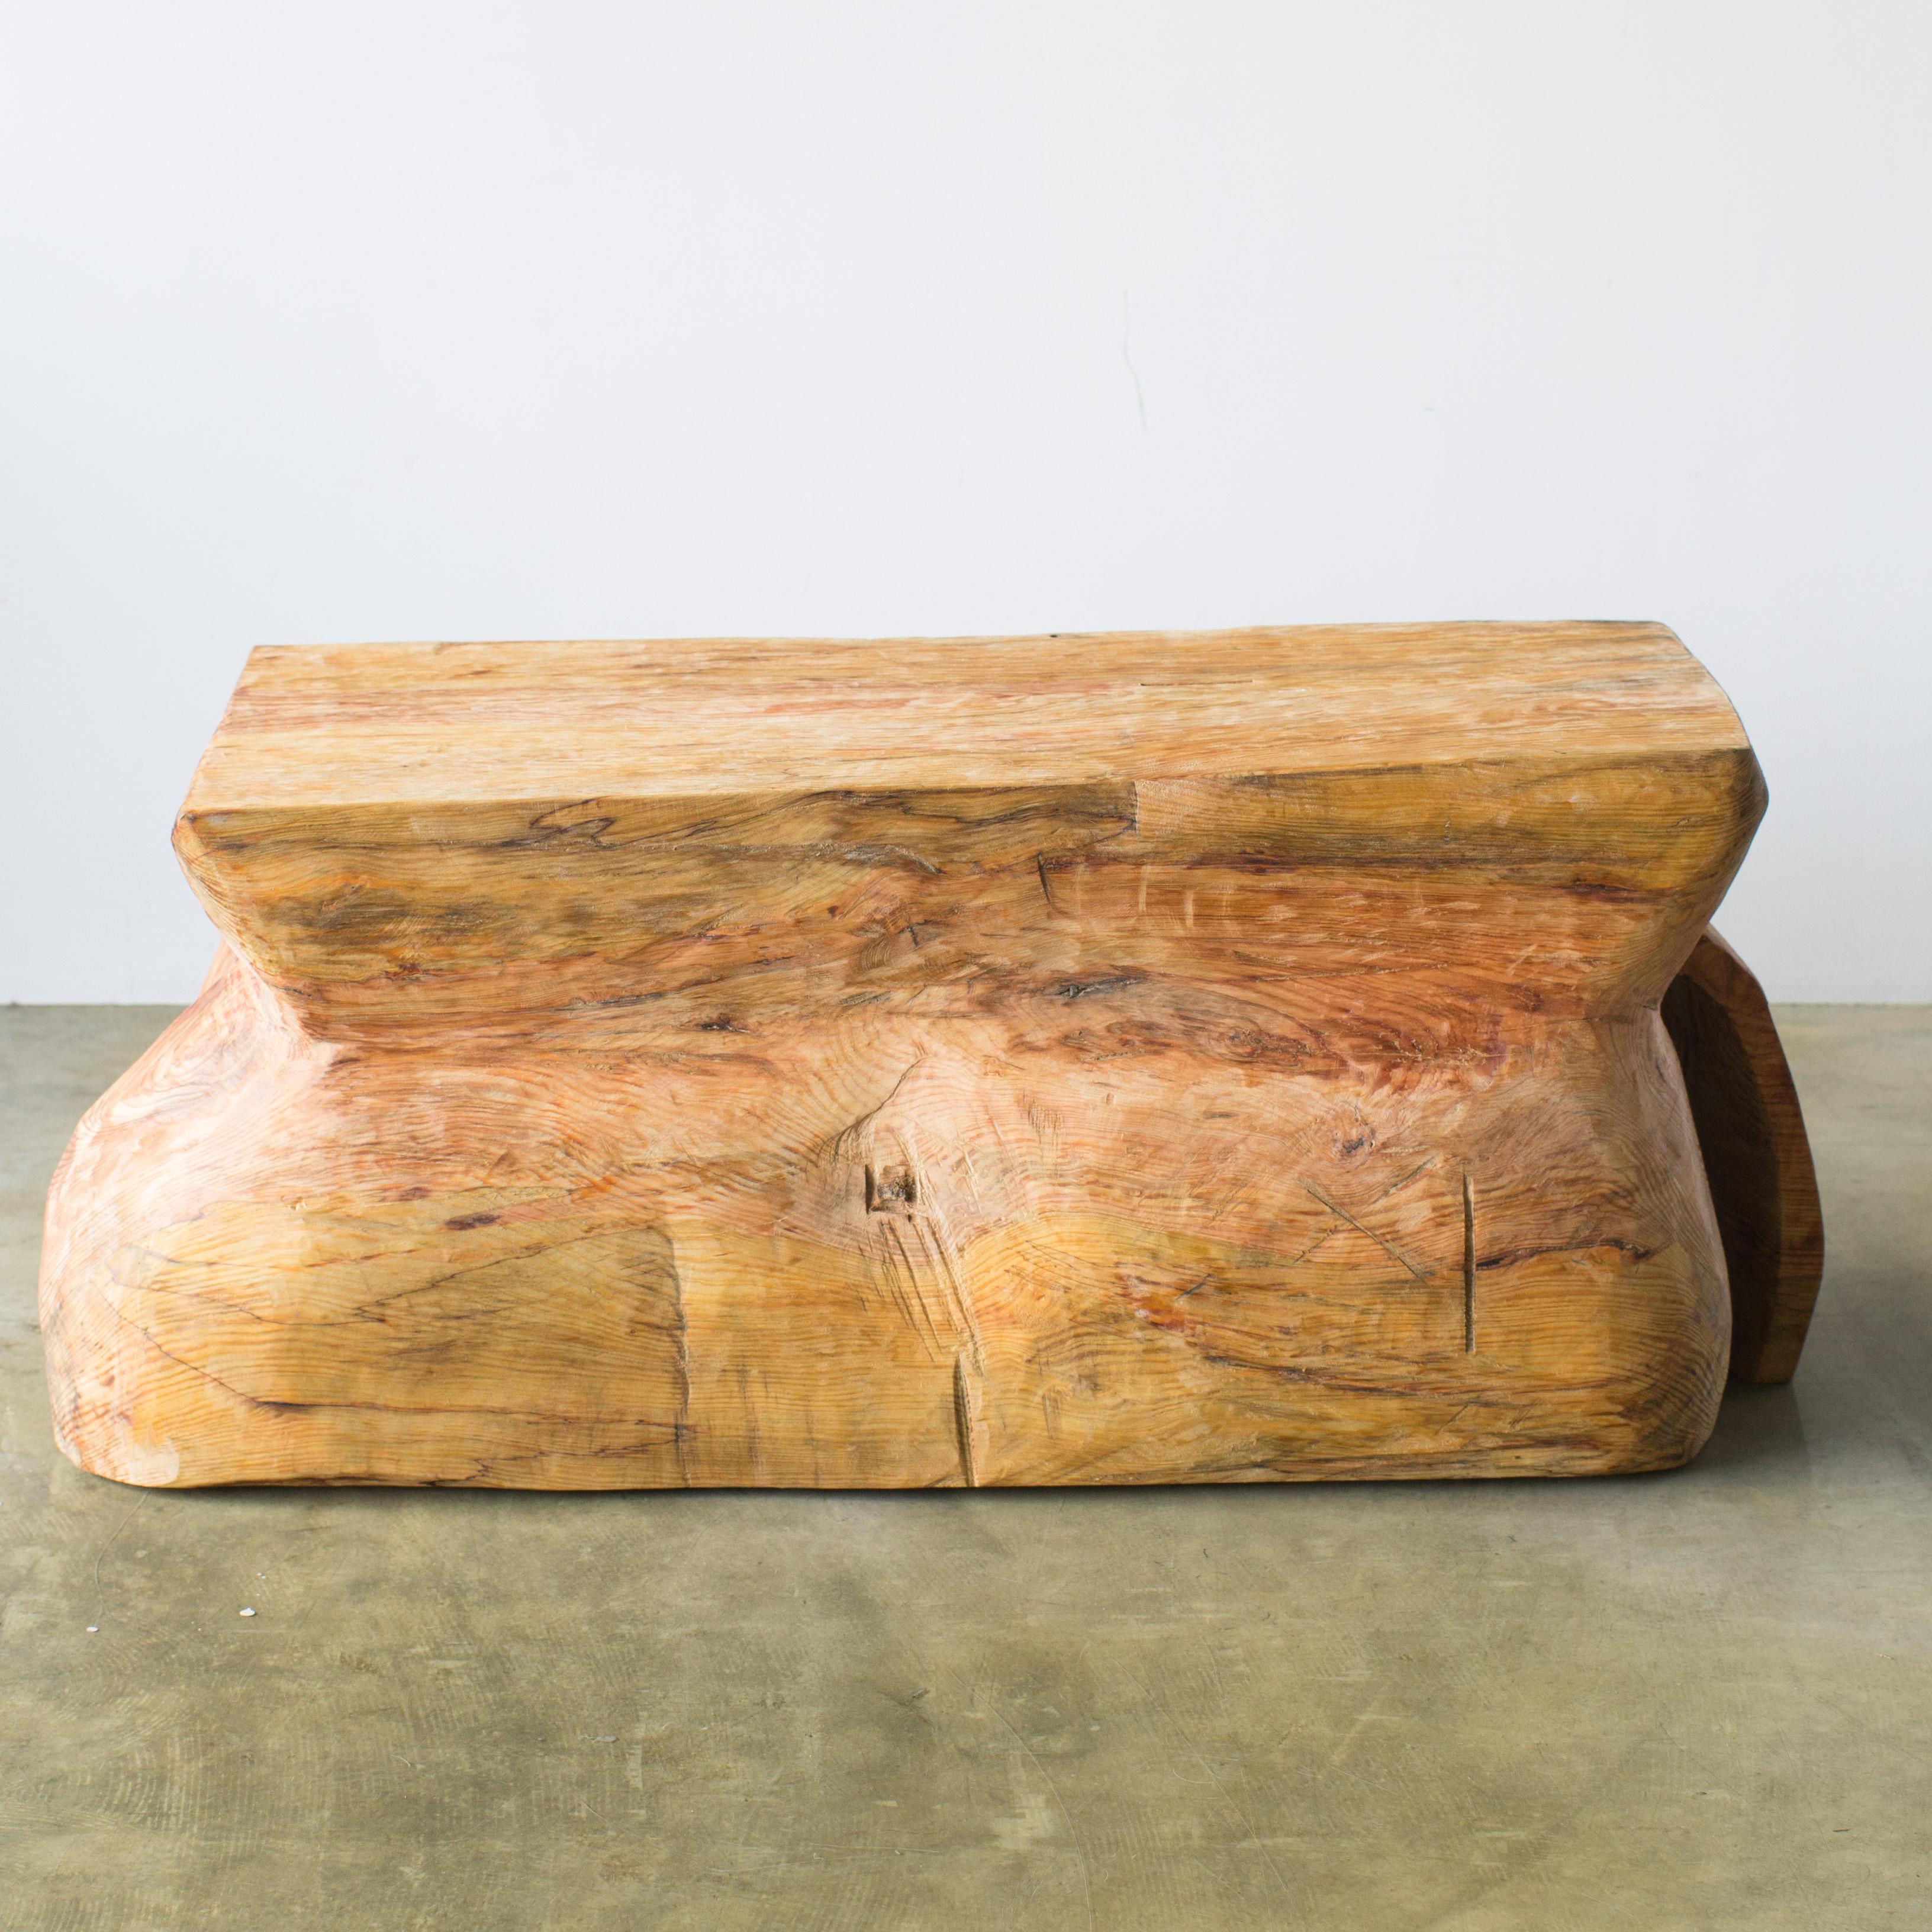 Tribal Hiroyuki Nishimura Sculpture wood Bench or Table Primitive Abstract